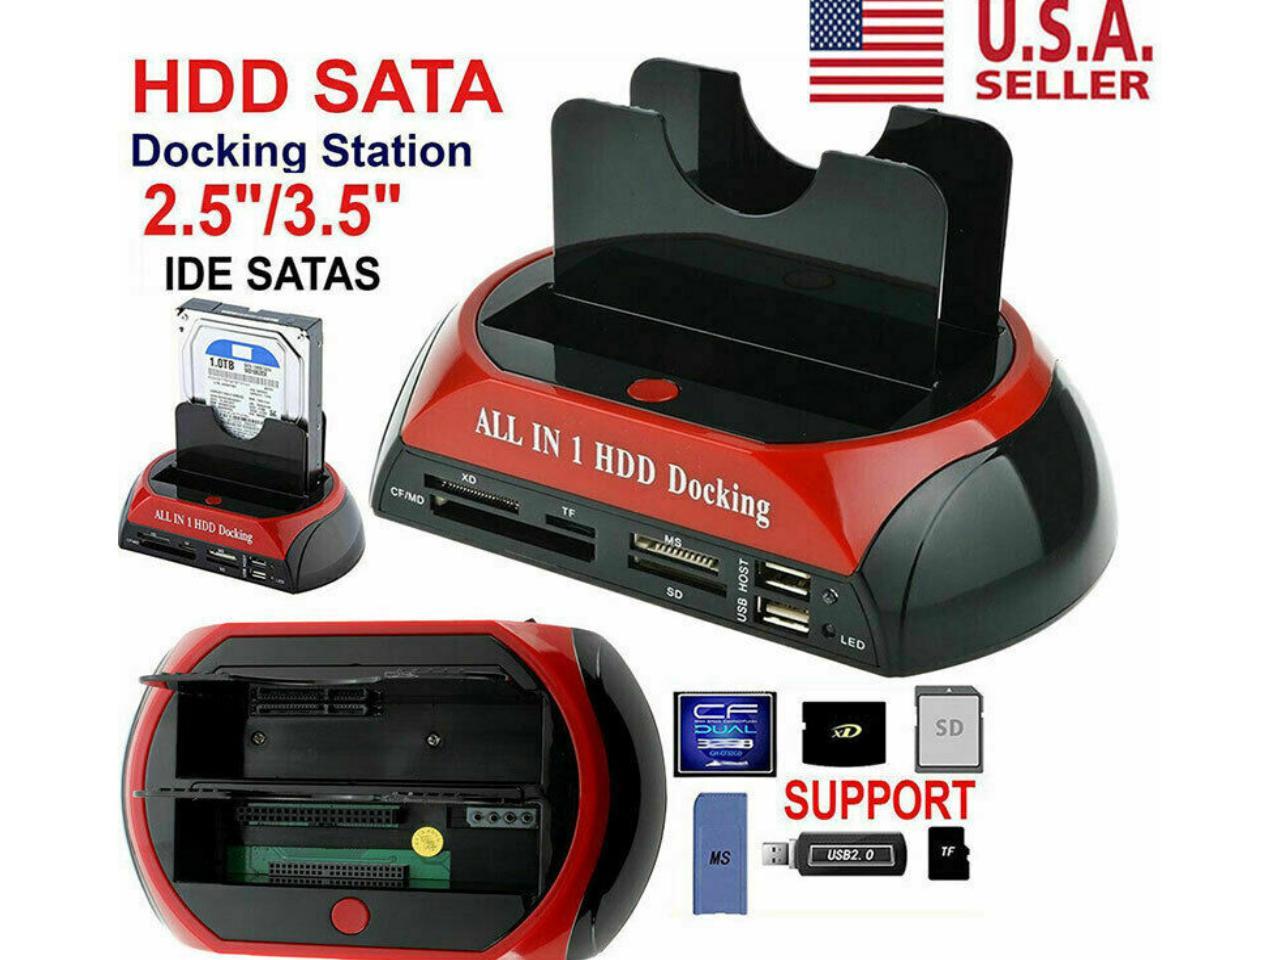 Docking Station HDD HUB 2.5/3.5 "SATA IDE HDD Docking Station USB 2.0 Clone E8V3 